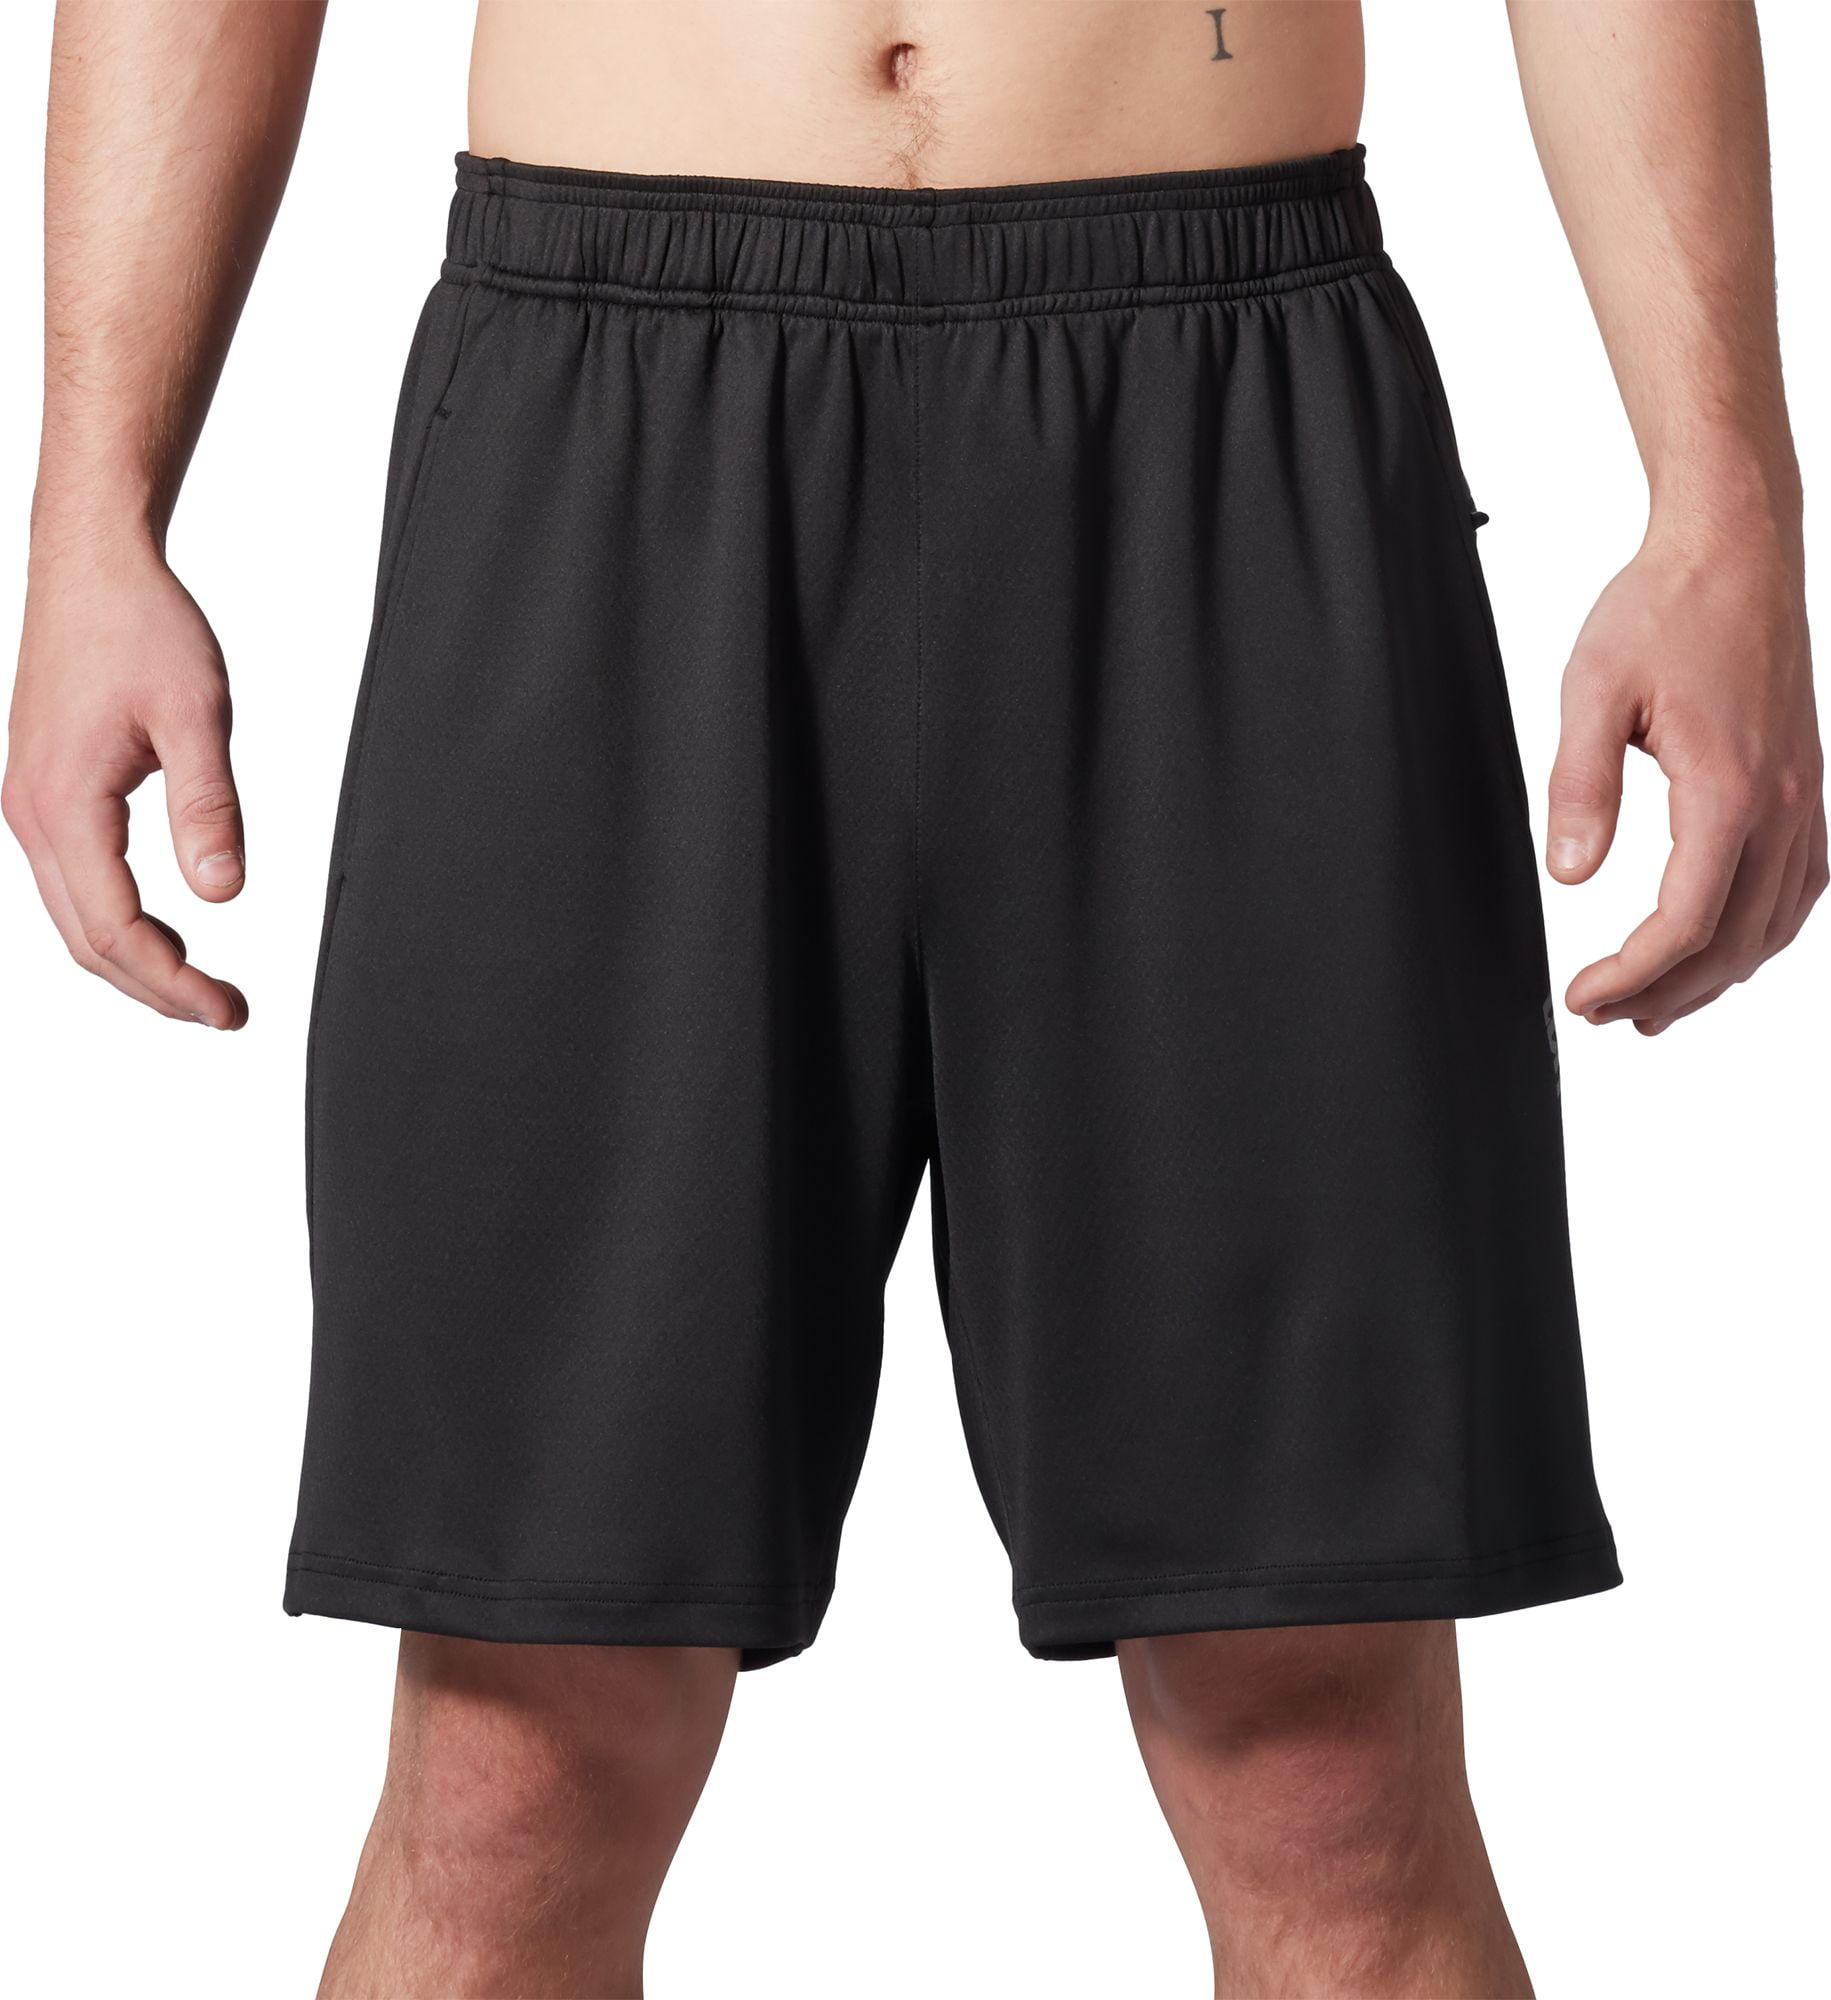 SecondSkin - second skin men's training 8'' knit shorts - Walmart.com ...